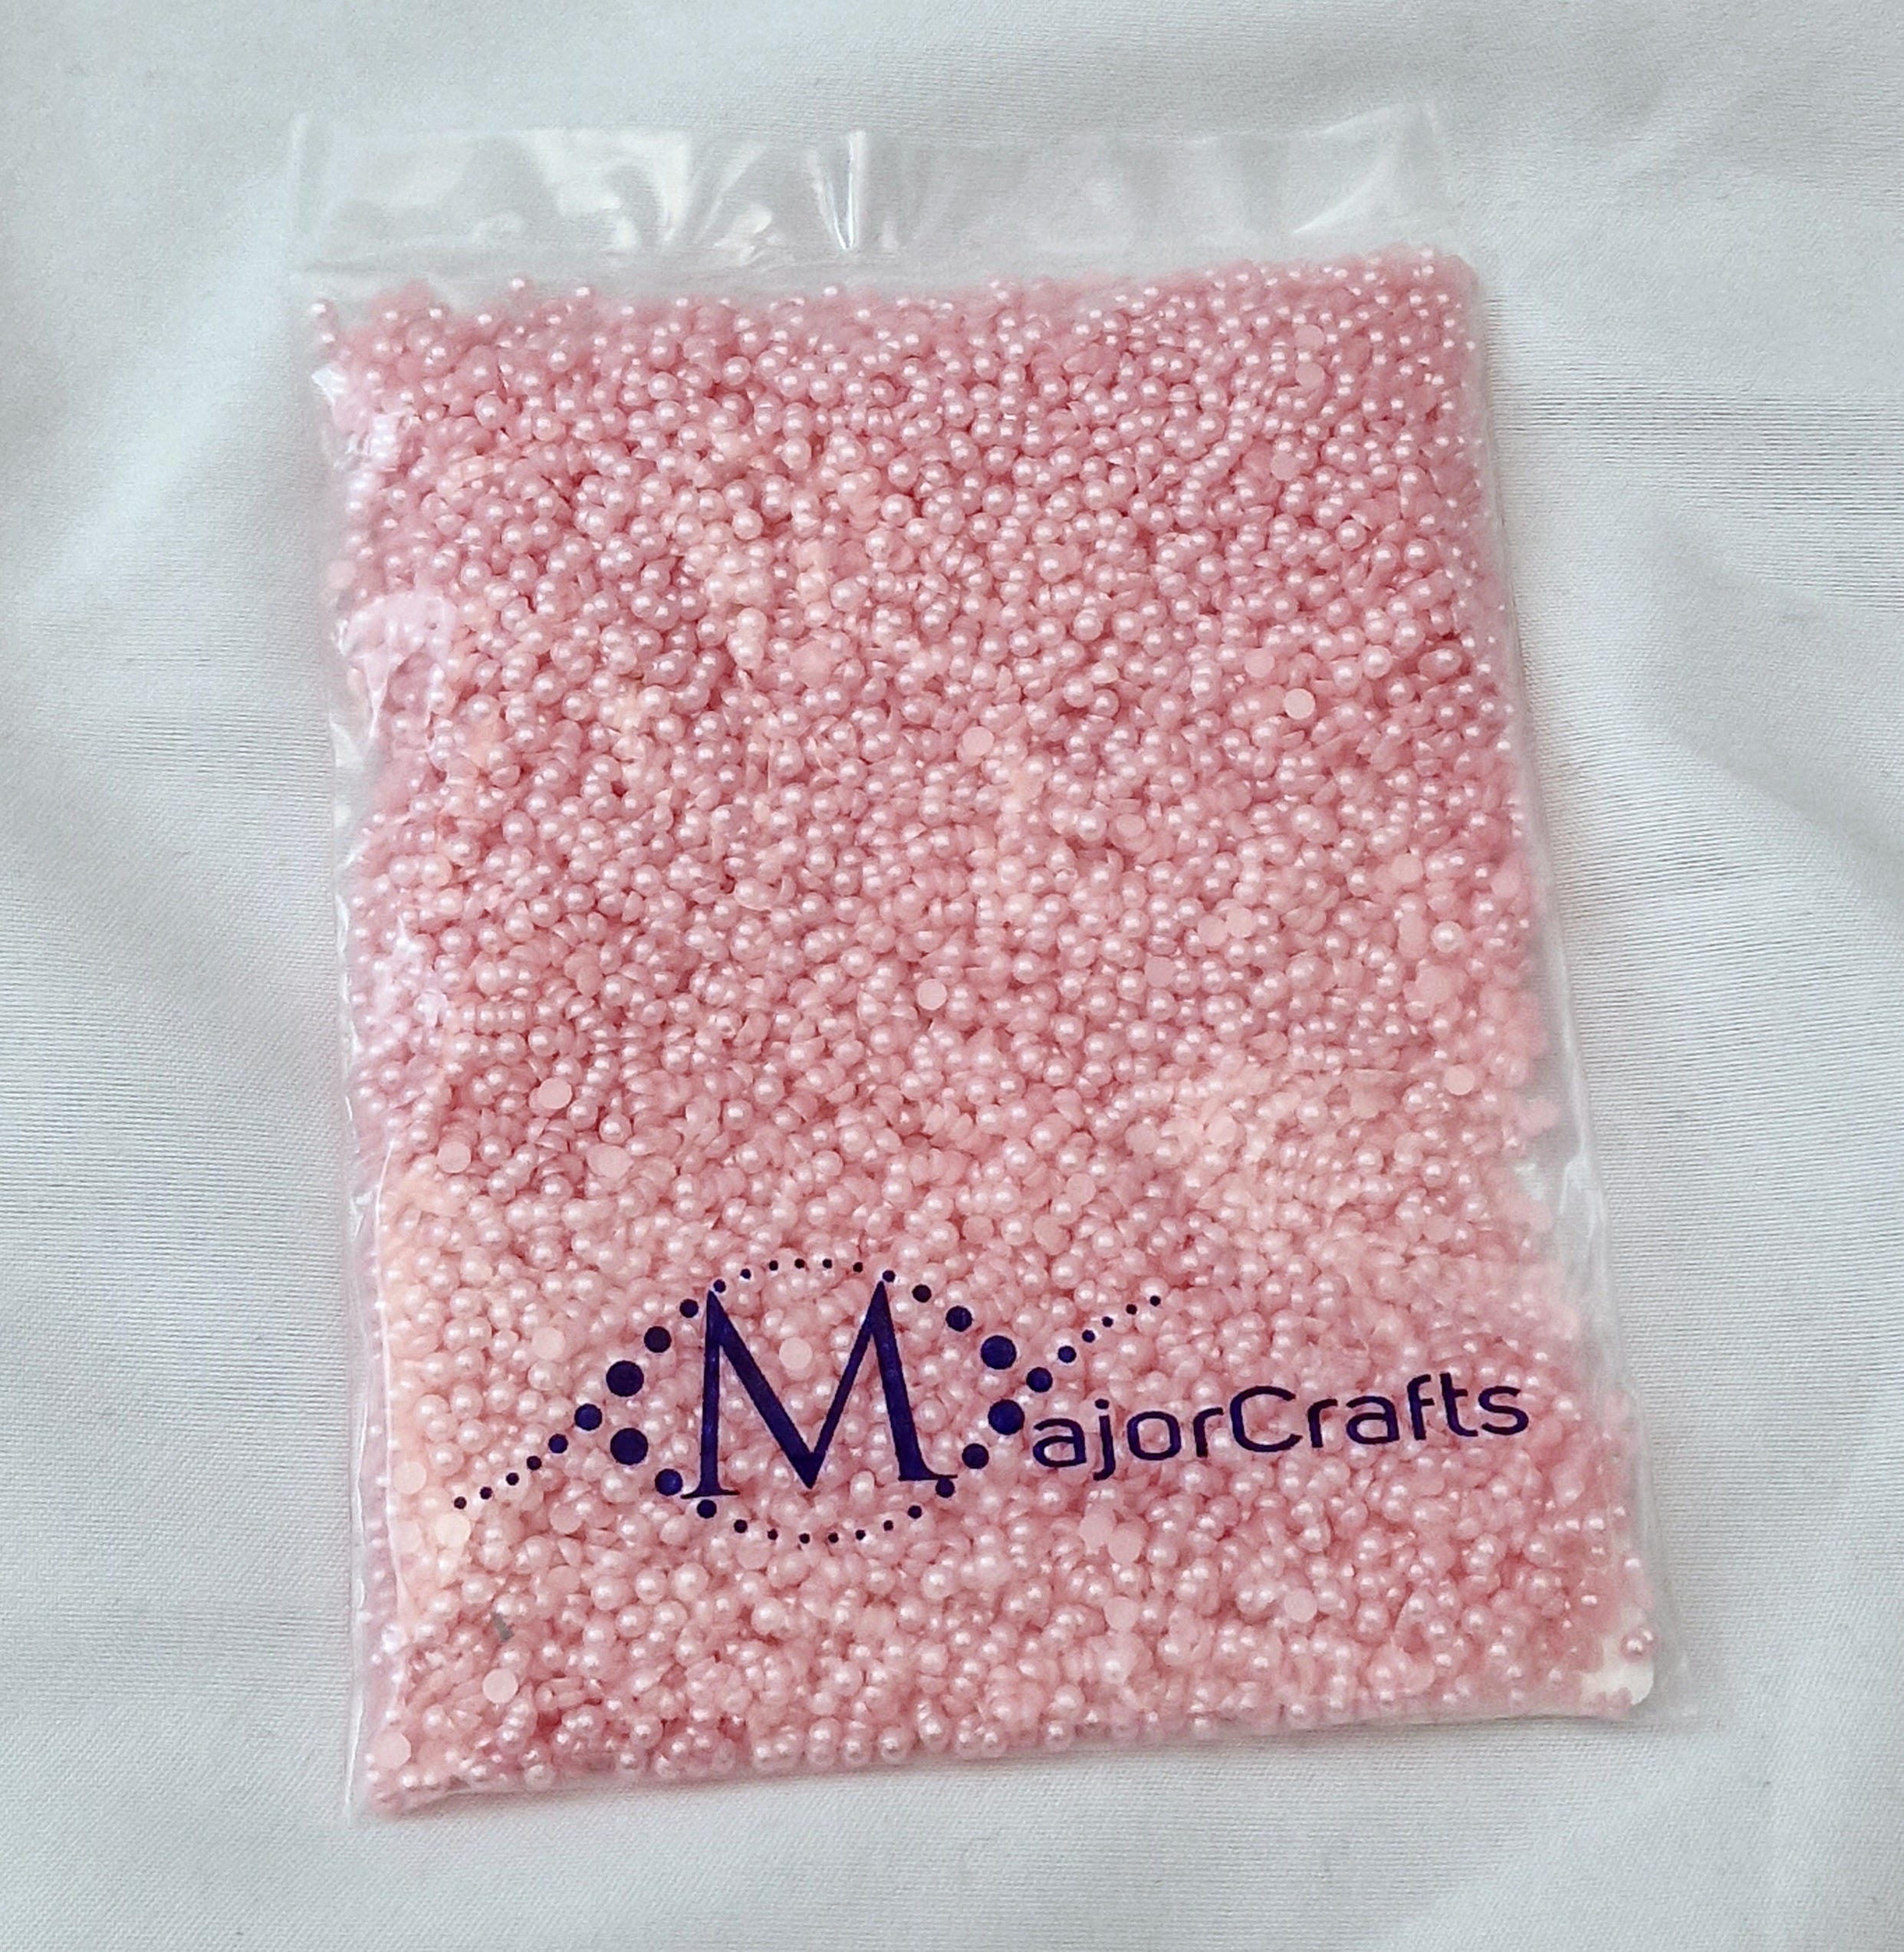 MajorCrafts Pale Pink Flat Back Half Round Resin Embellishment Pearls C27